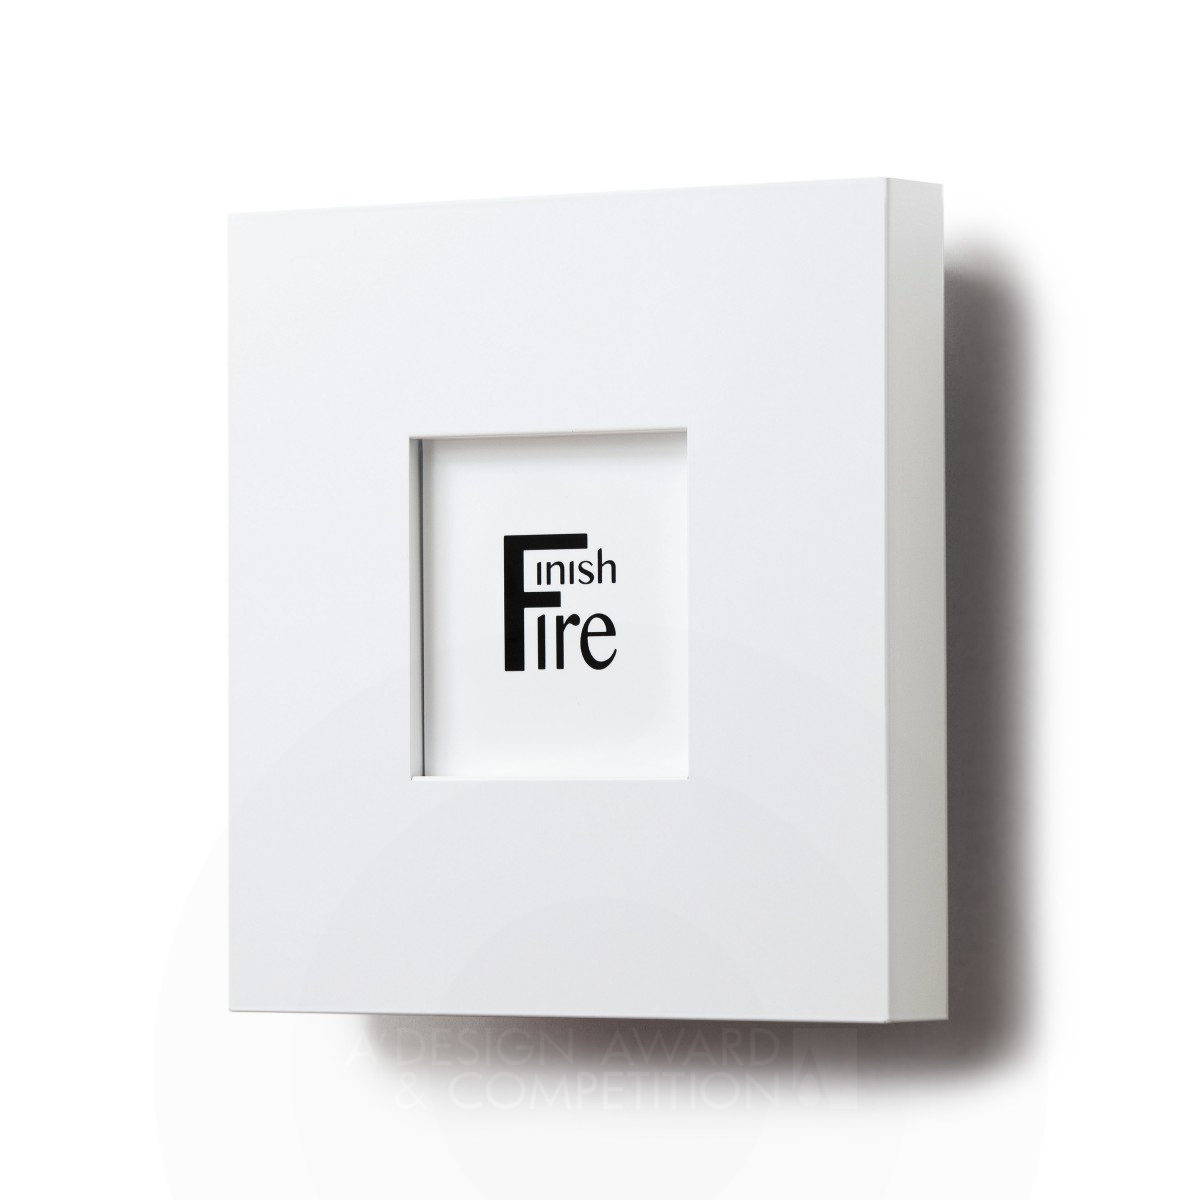 Finishfire Frame covers extinguishing equipment